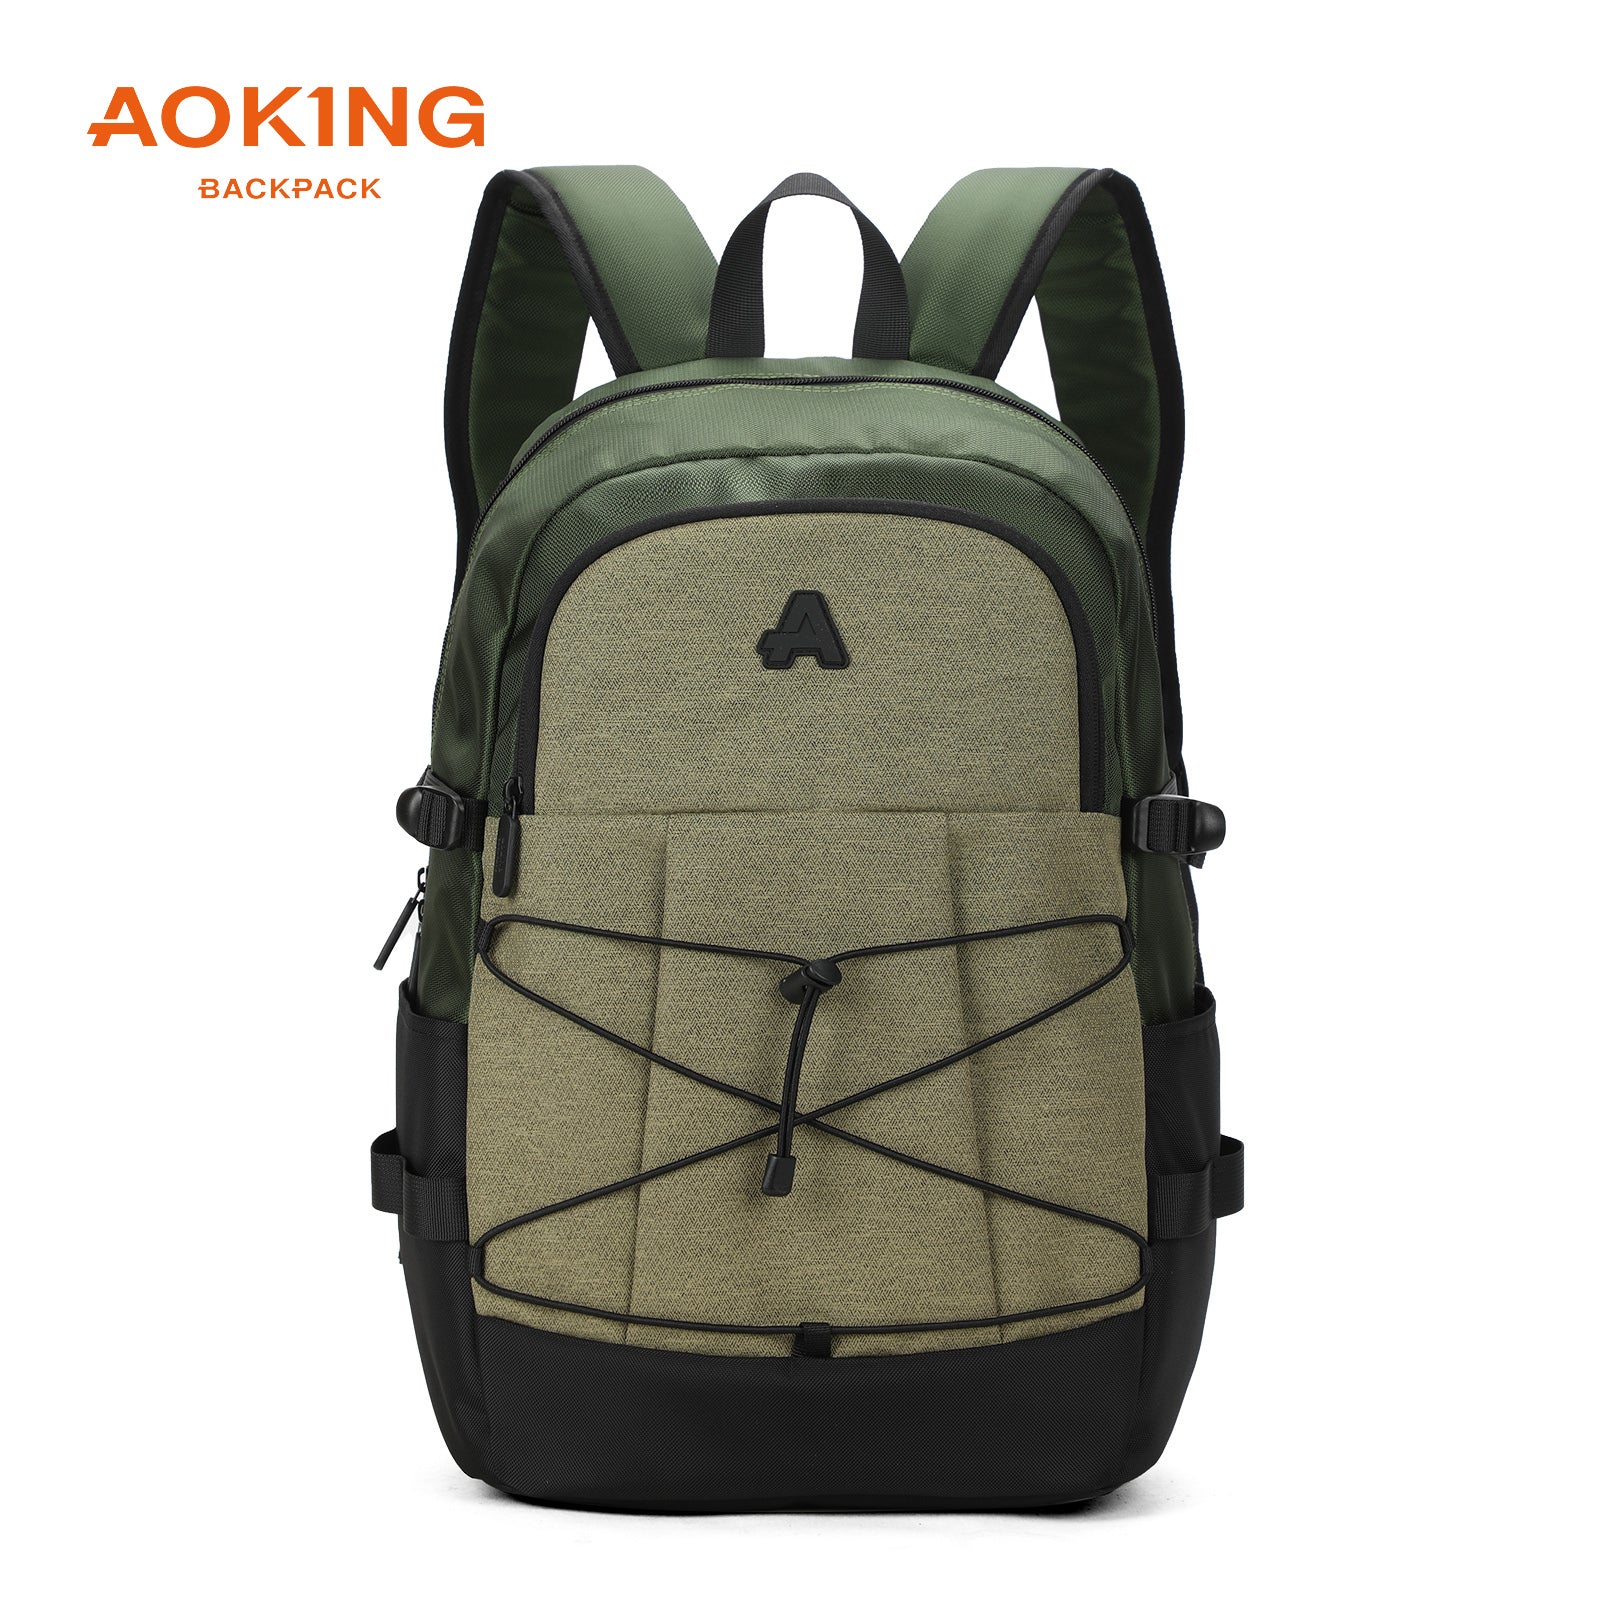 Aoking Backpack Casual Backpack Student Bag XN3506